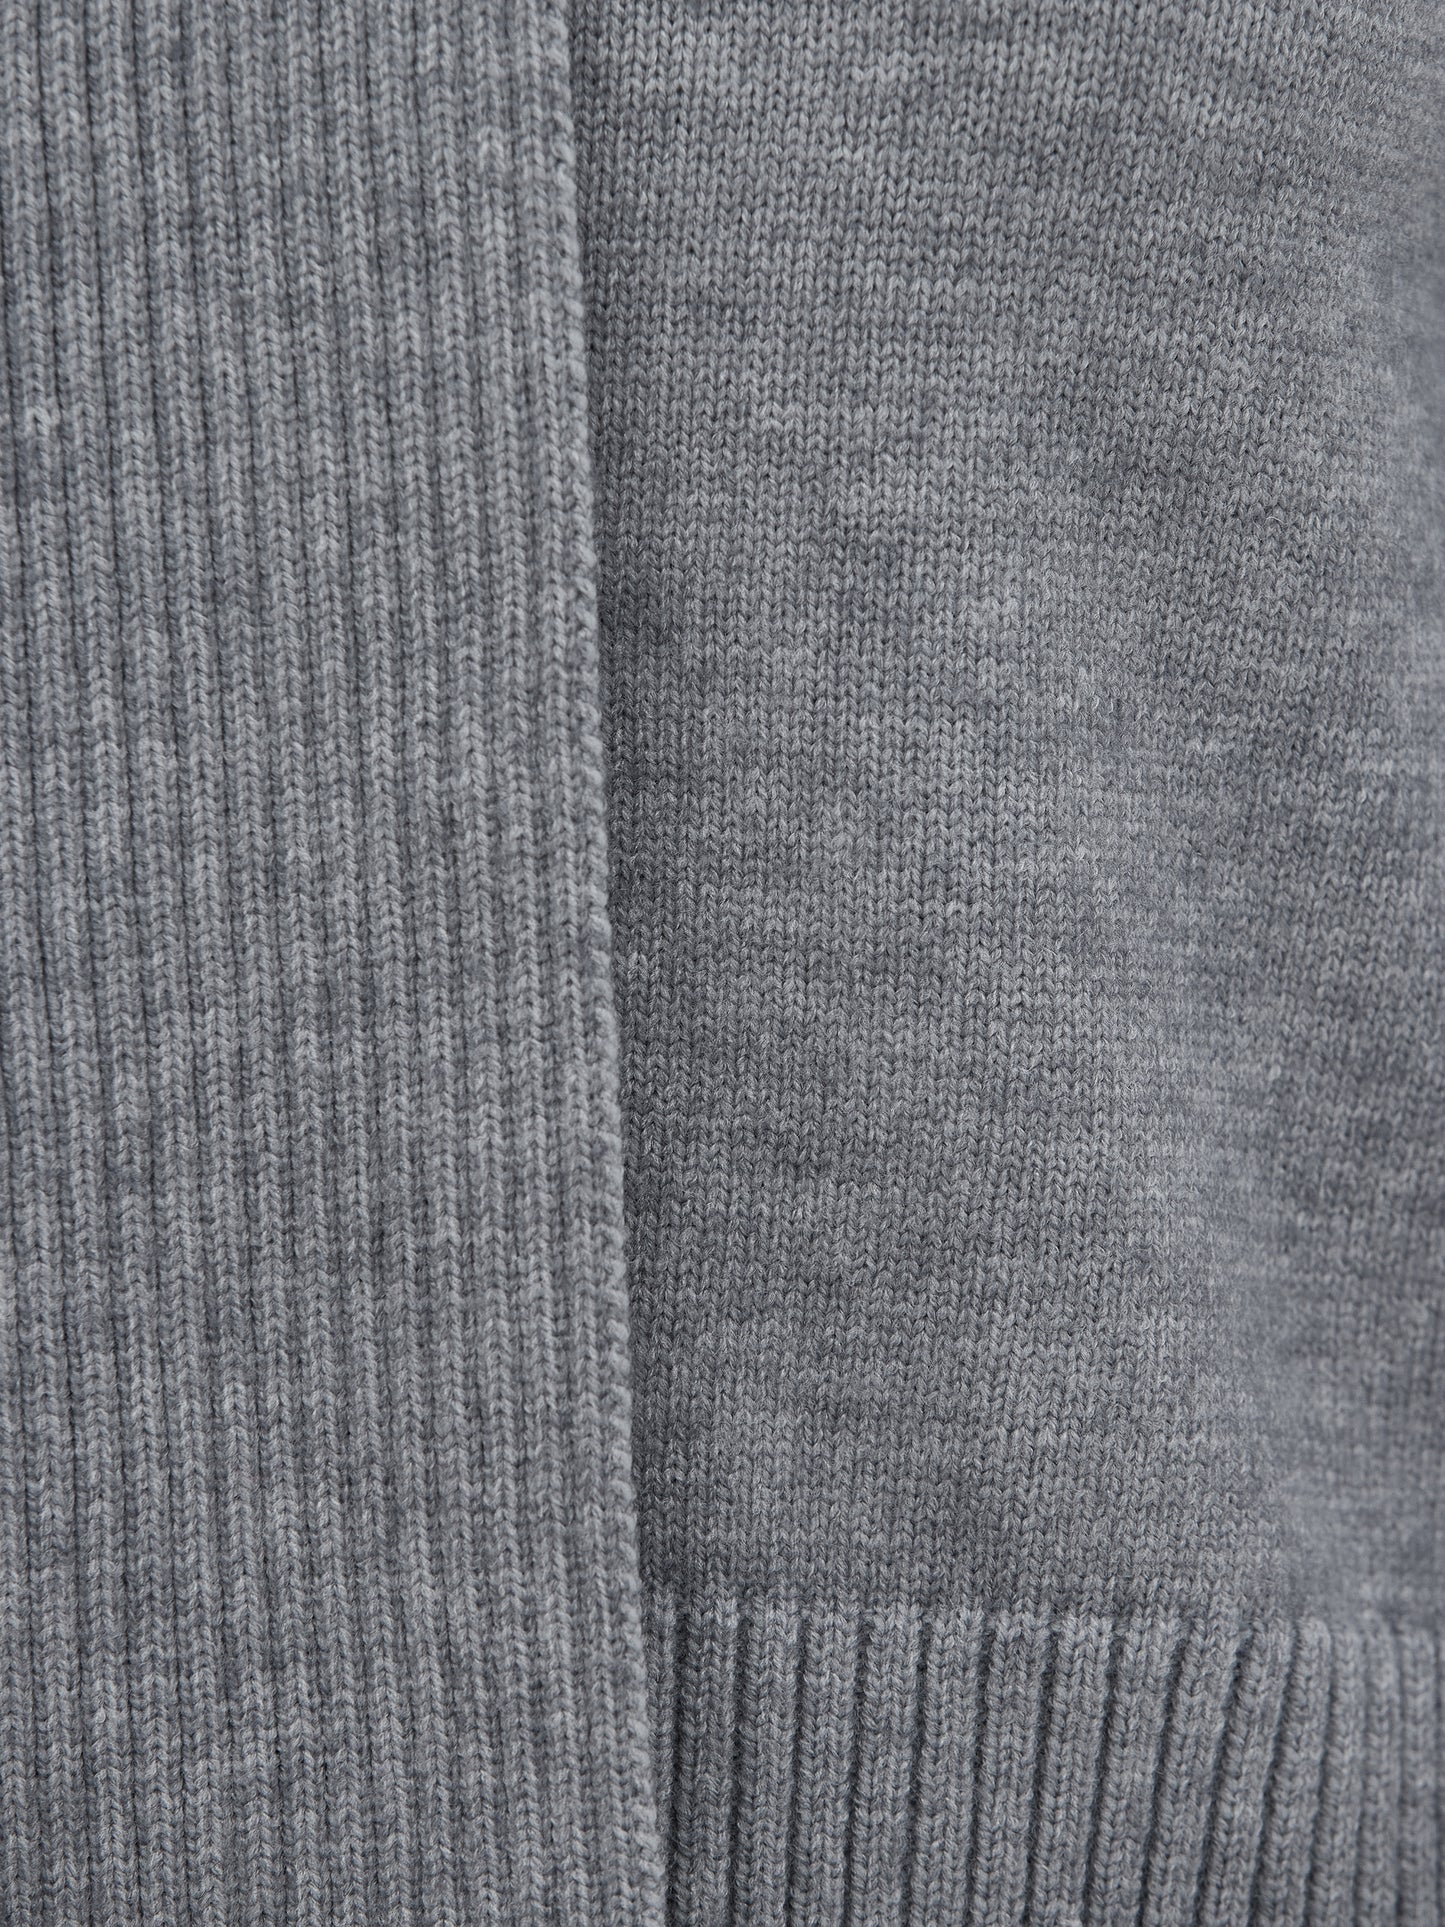 Scarf Knit Top, Grey